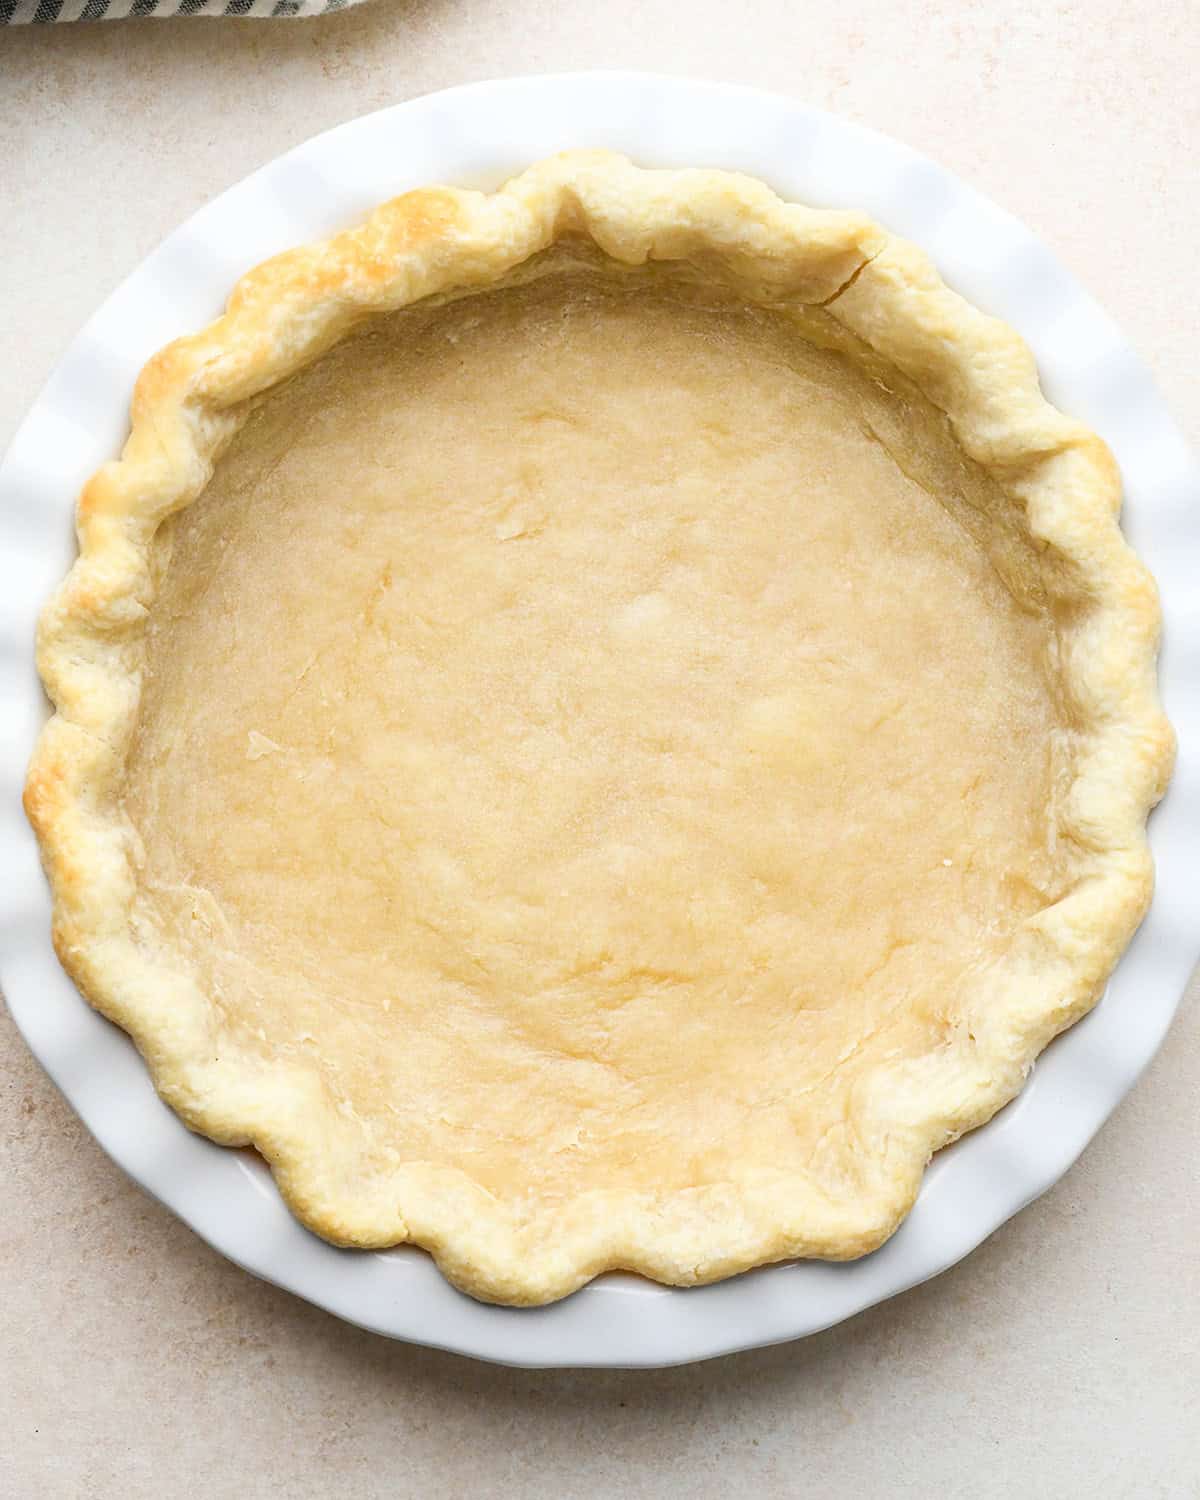 par-baked pie crust in a pie dish to make this quiche recipe